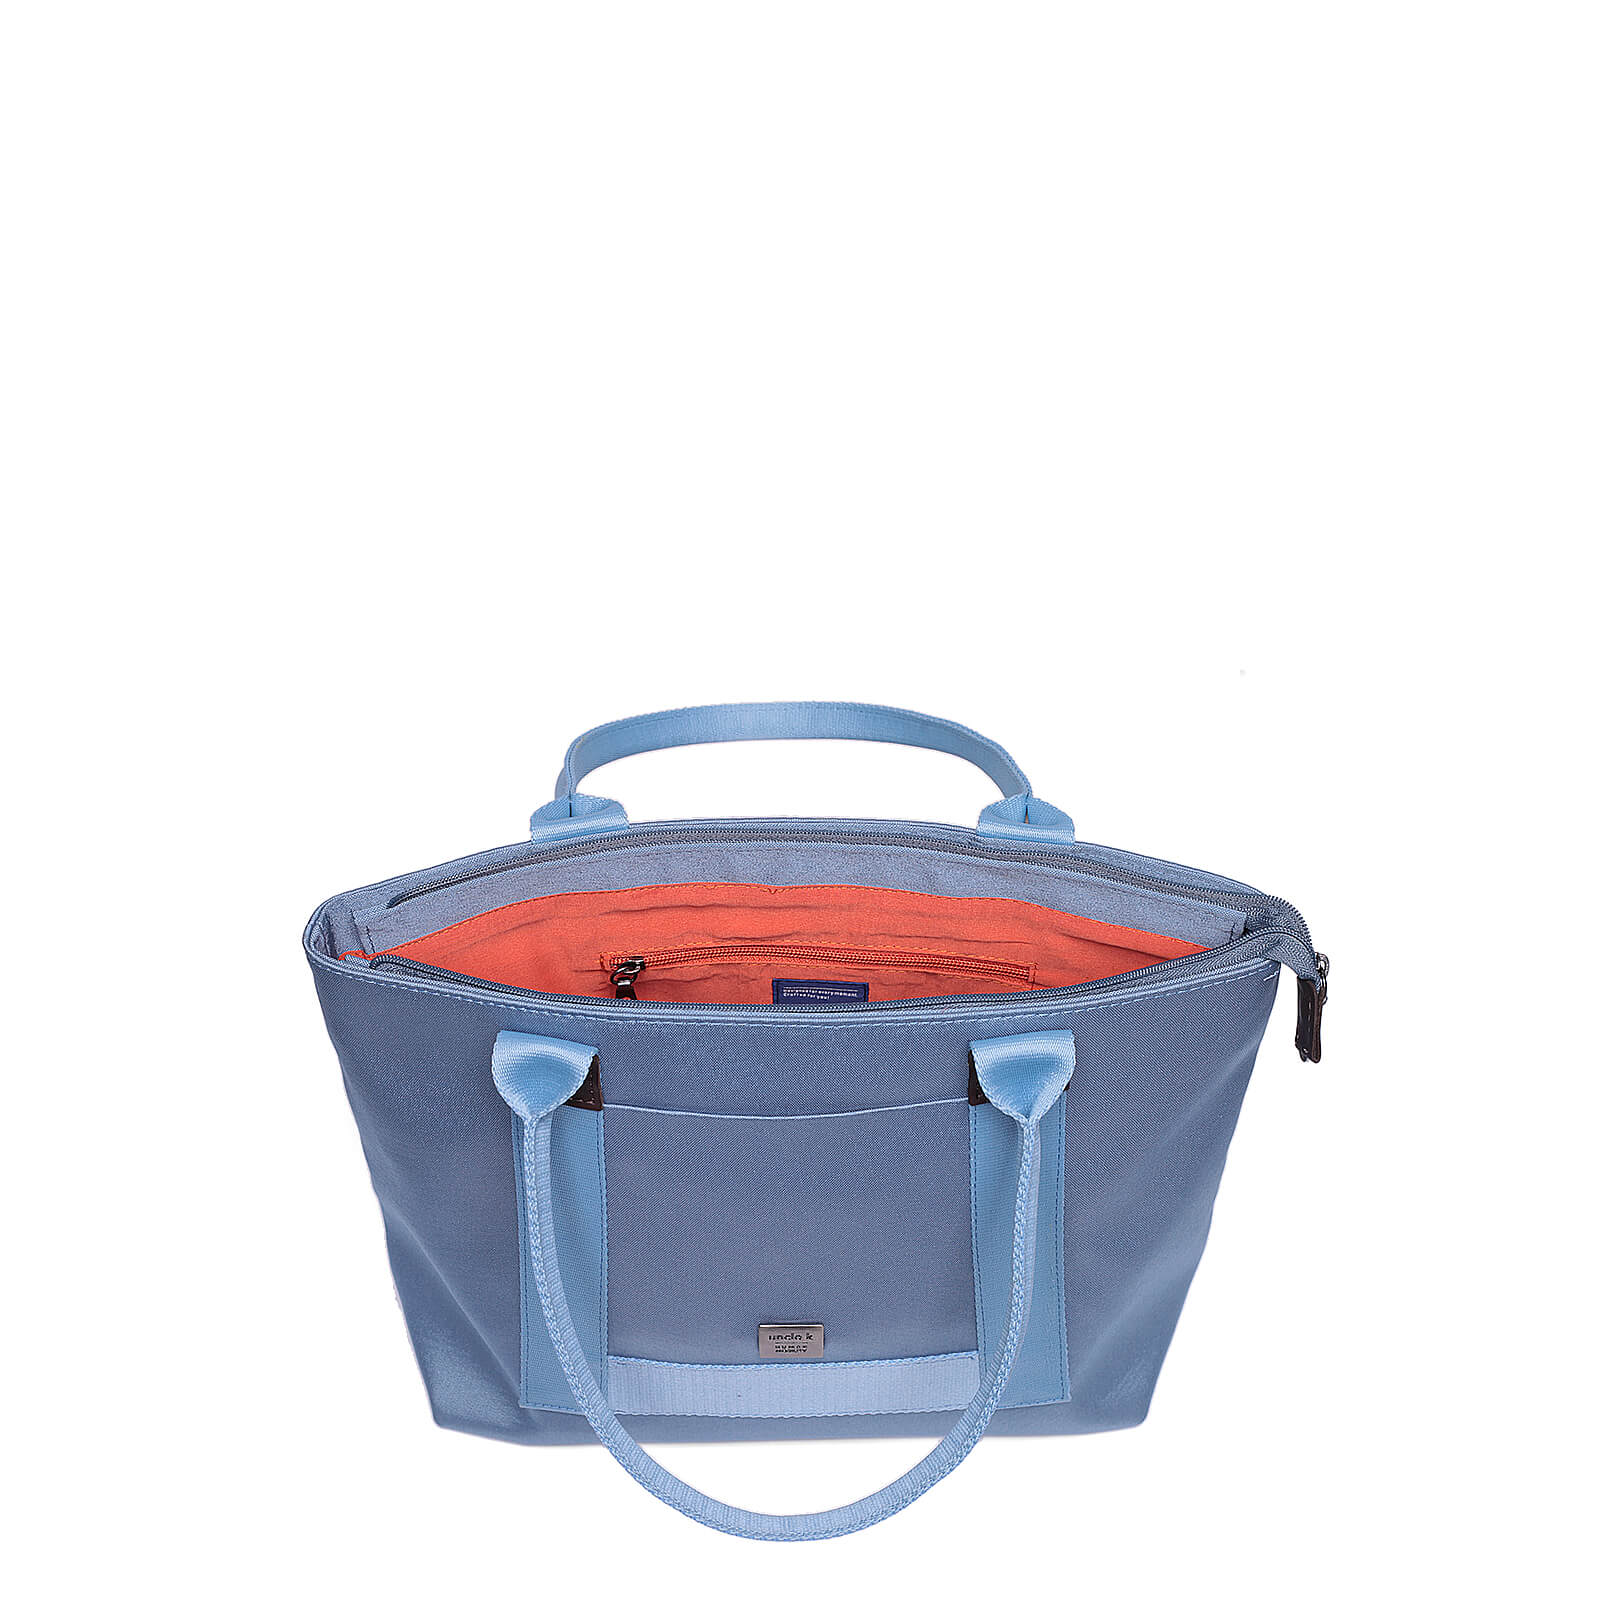 bolsa-shopping-bag-nylon-61092-v24-unclek-azul-3